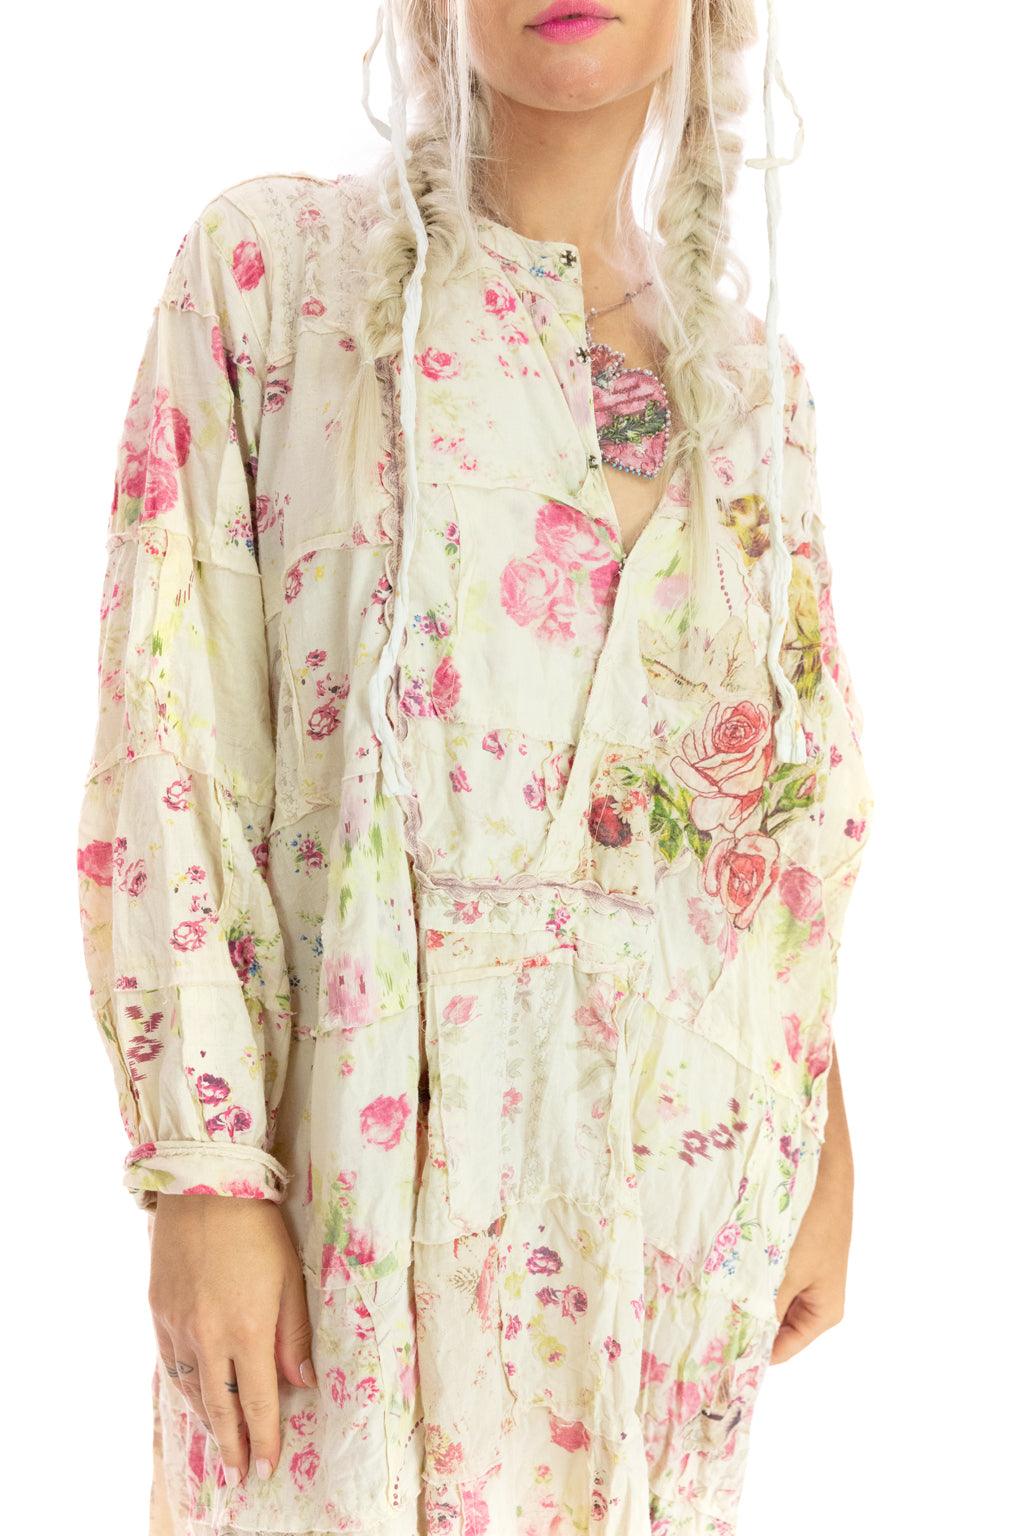 Floral Patchwork Prairie Dress - Magnolia Pearl Clothing